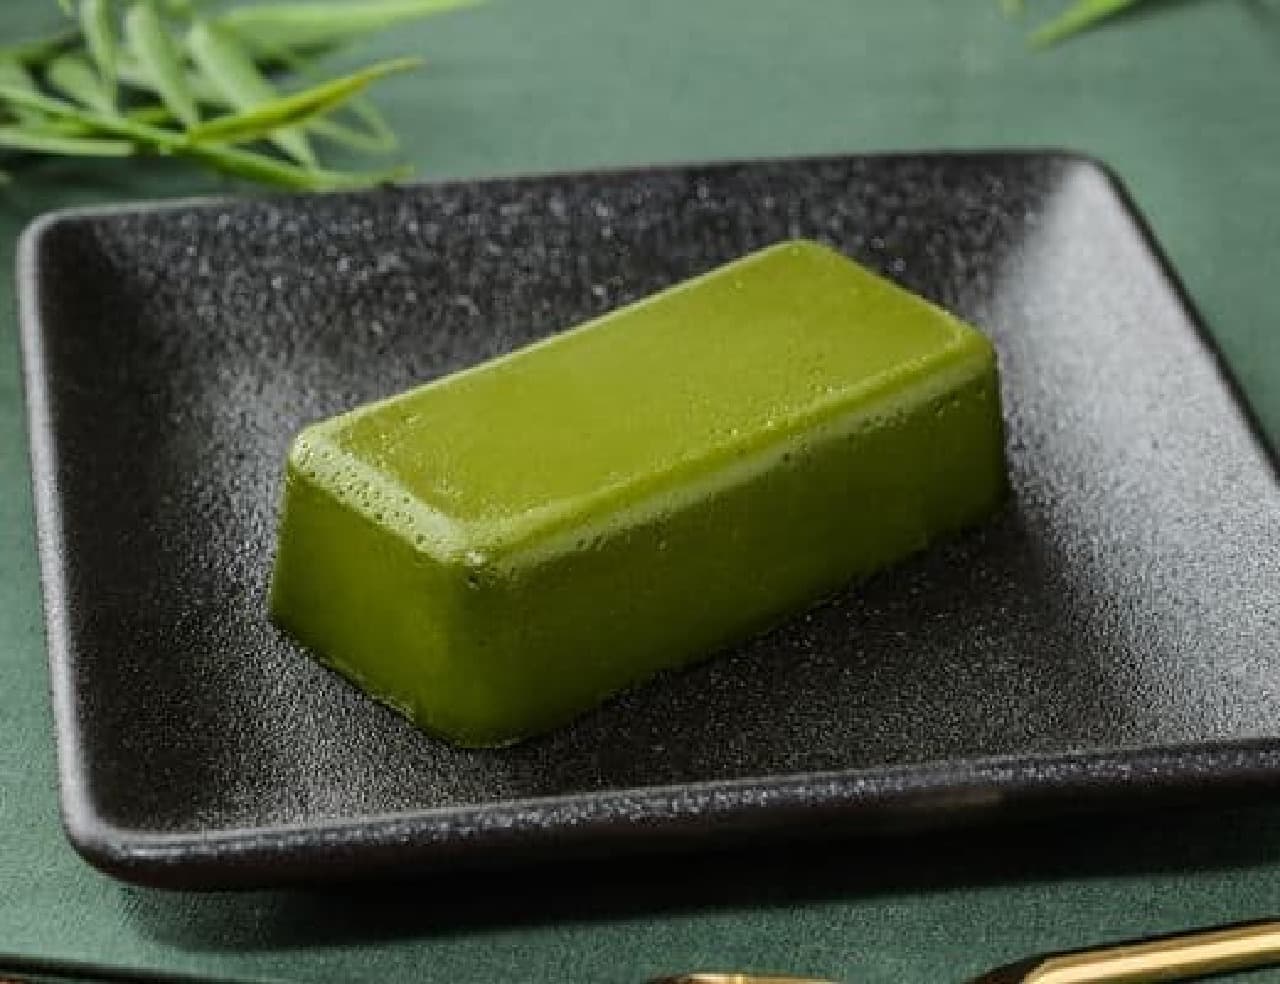 LAWSON "Uchi Cafe Specialite Japanese Melting Green Tea Terrine".